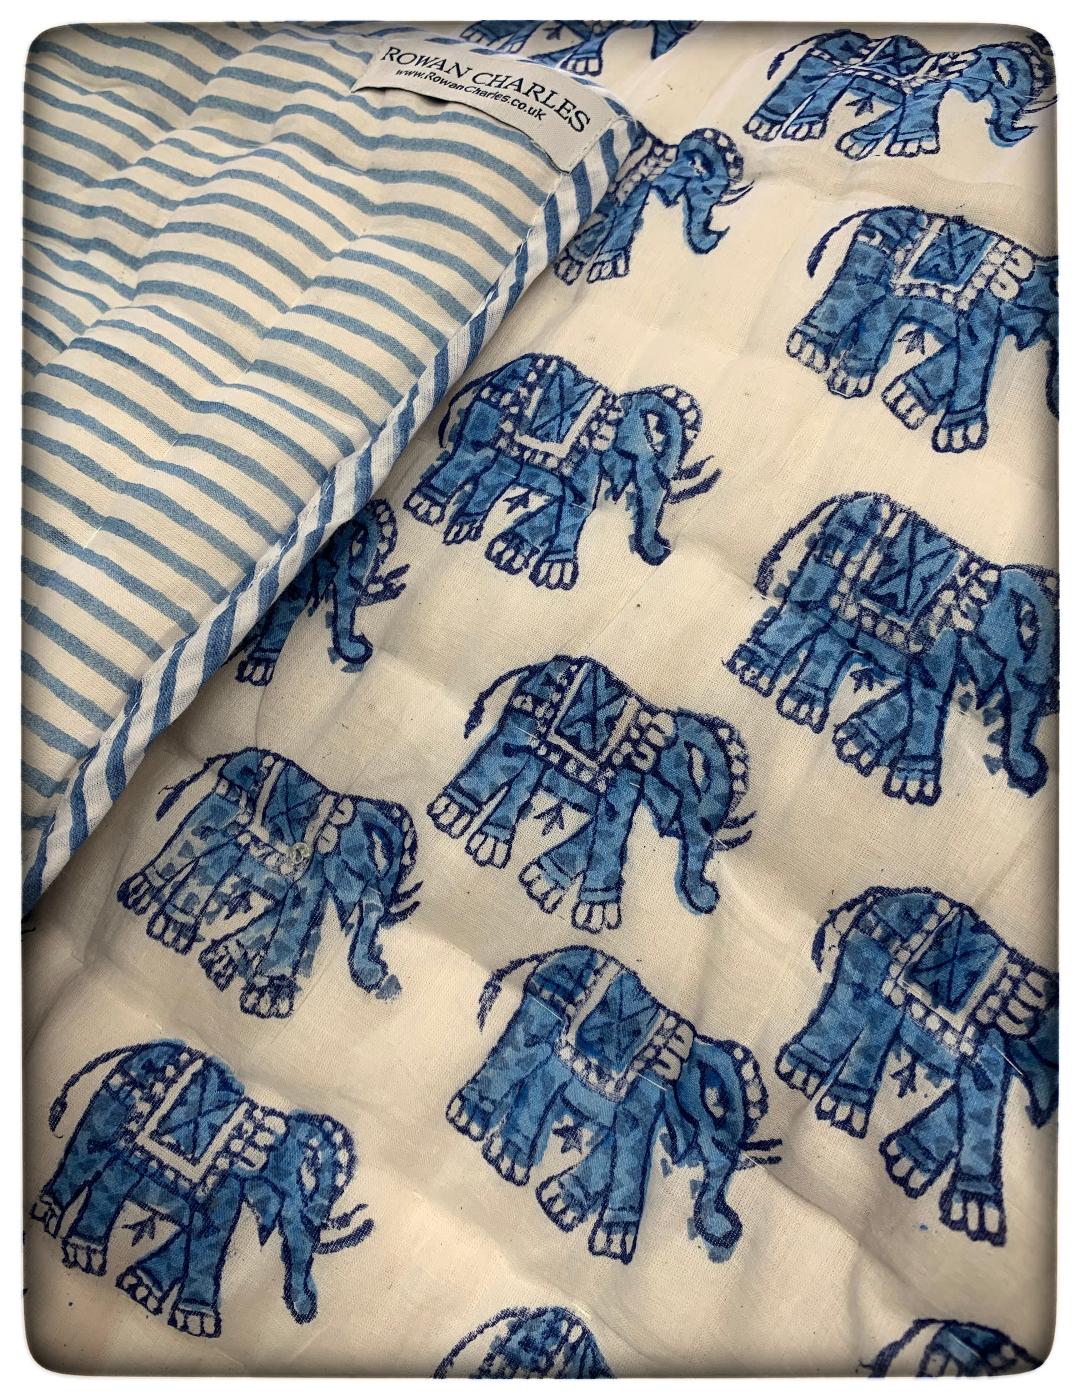 Ernie Blue Elephant Animal Print Quilt/Playmat